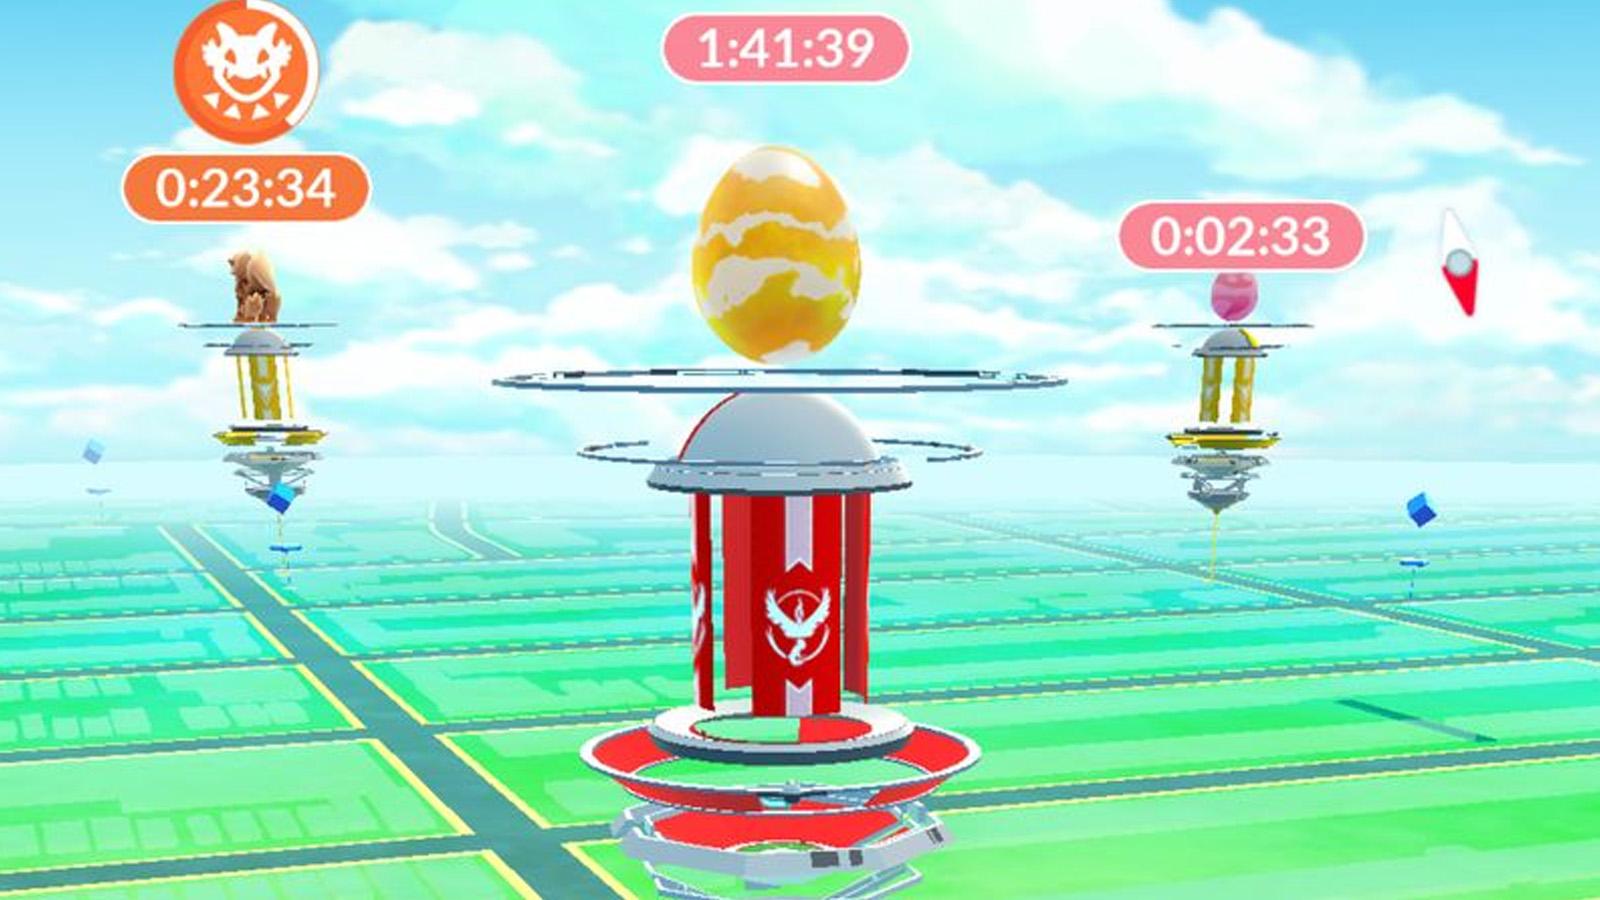 Pokemon Go raids could be getting big improvements in the future - Dexerto